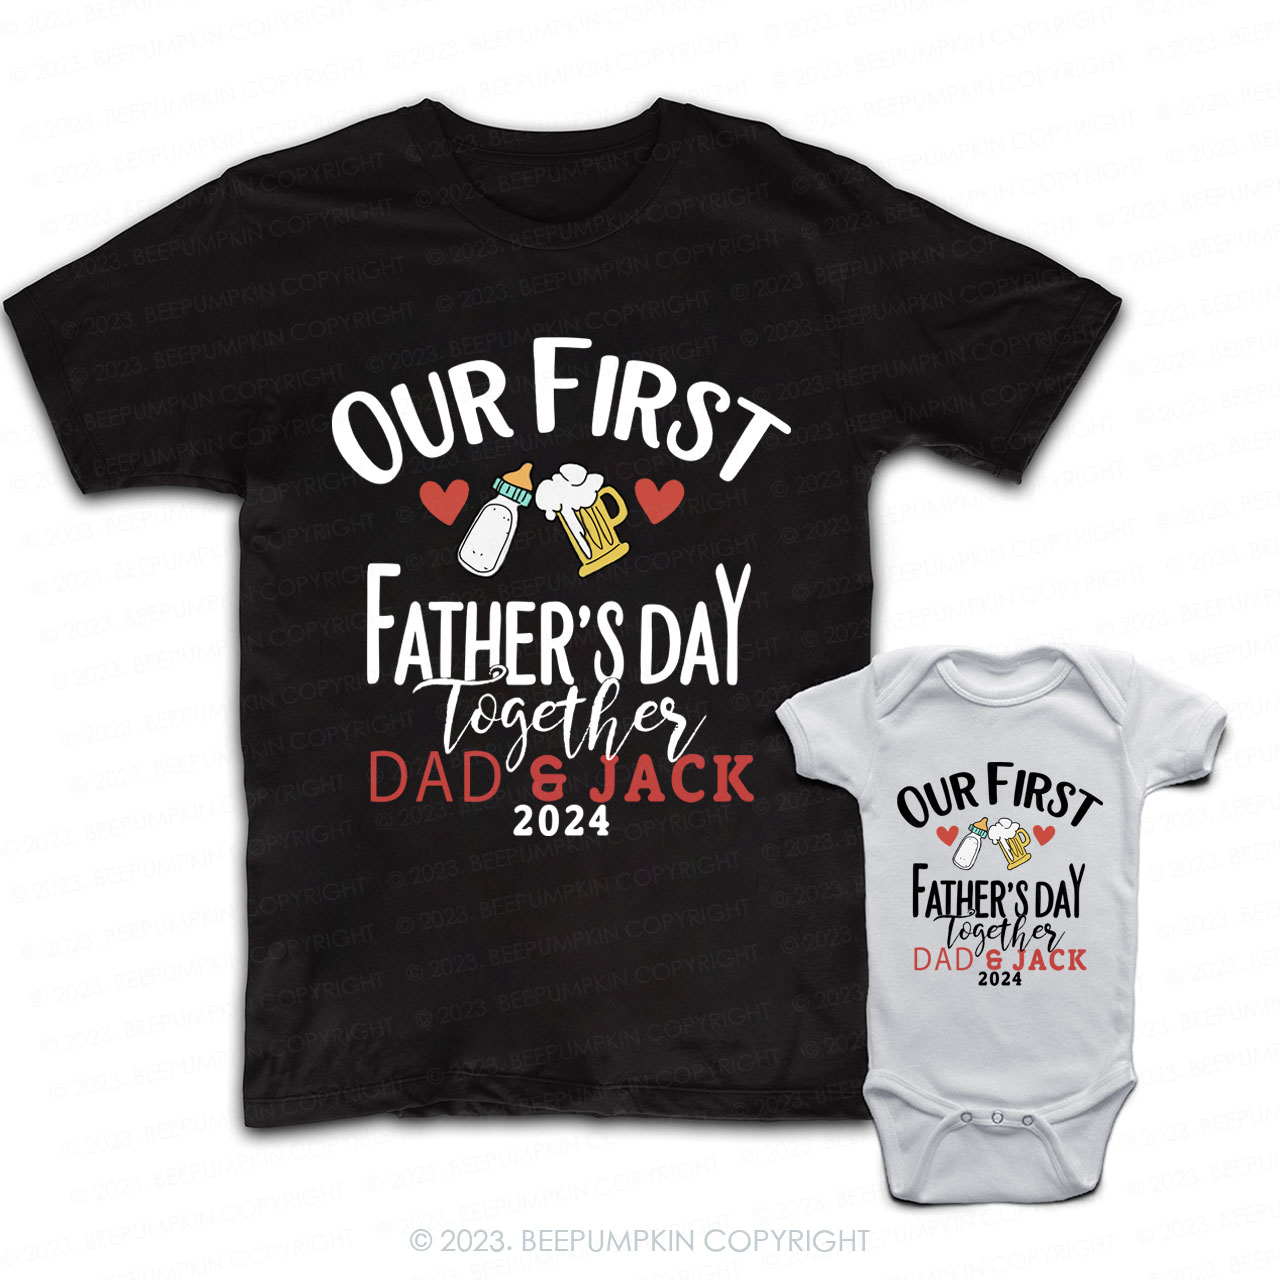 Cheers Dad & Baby Matching Shirts